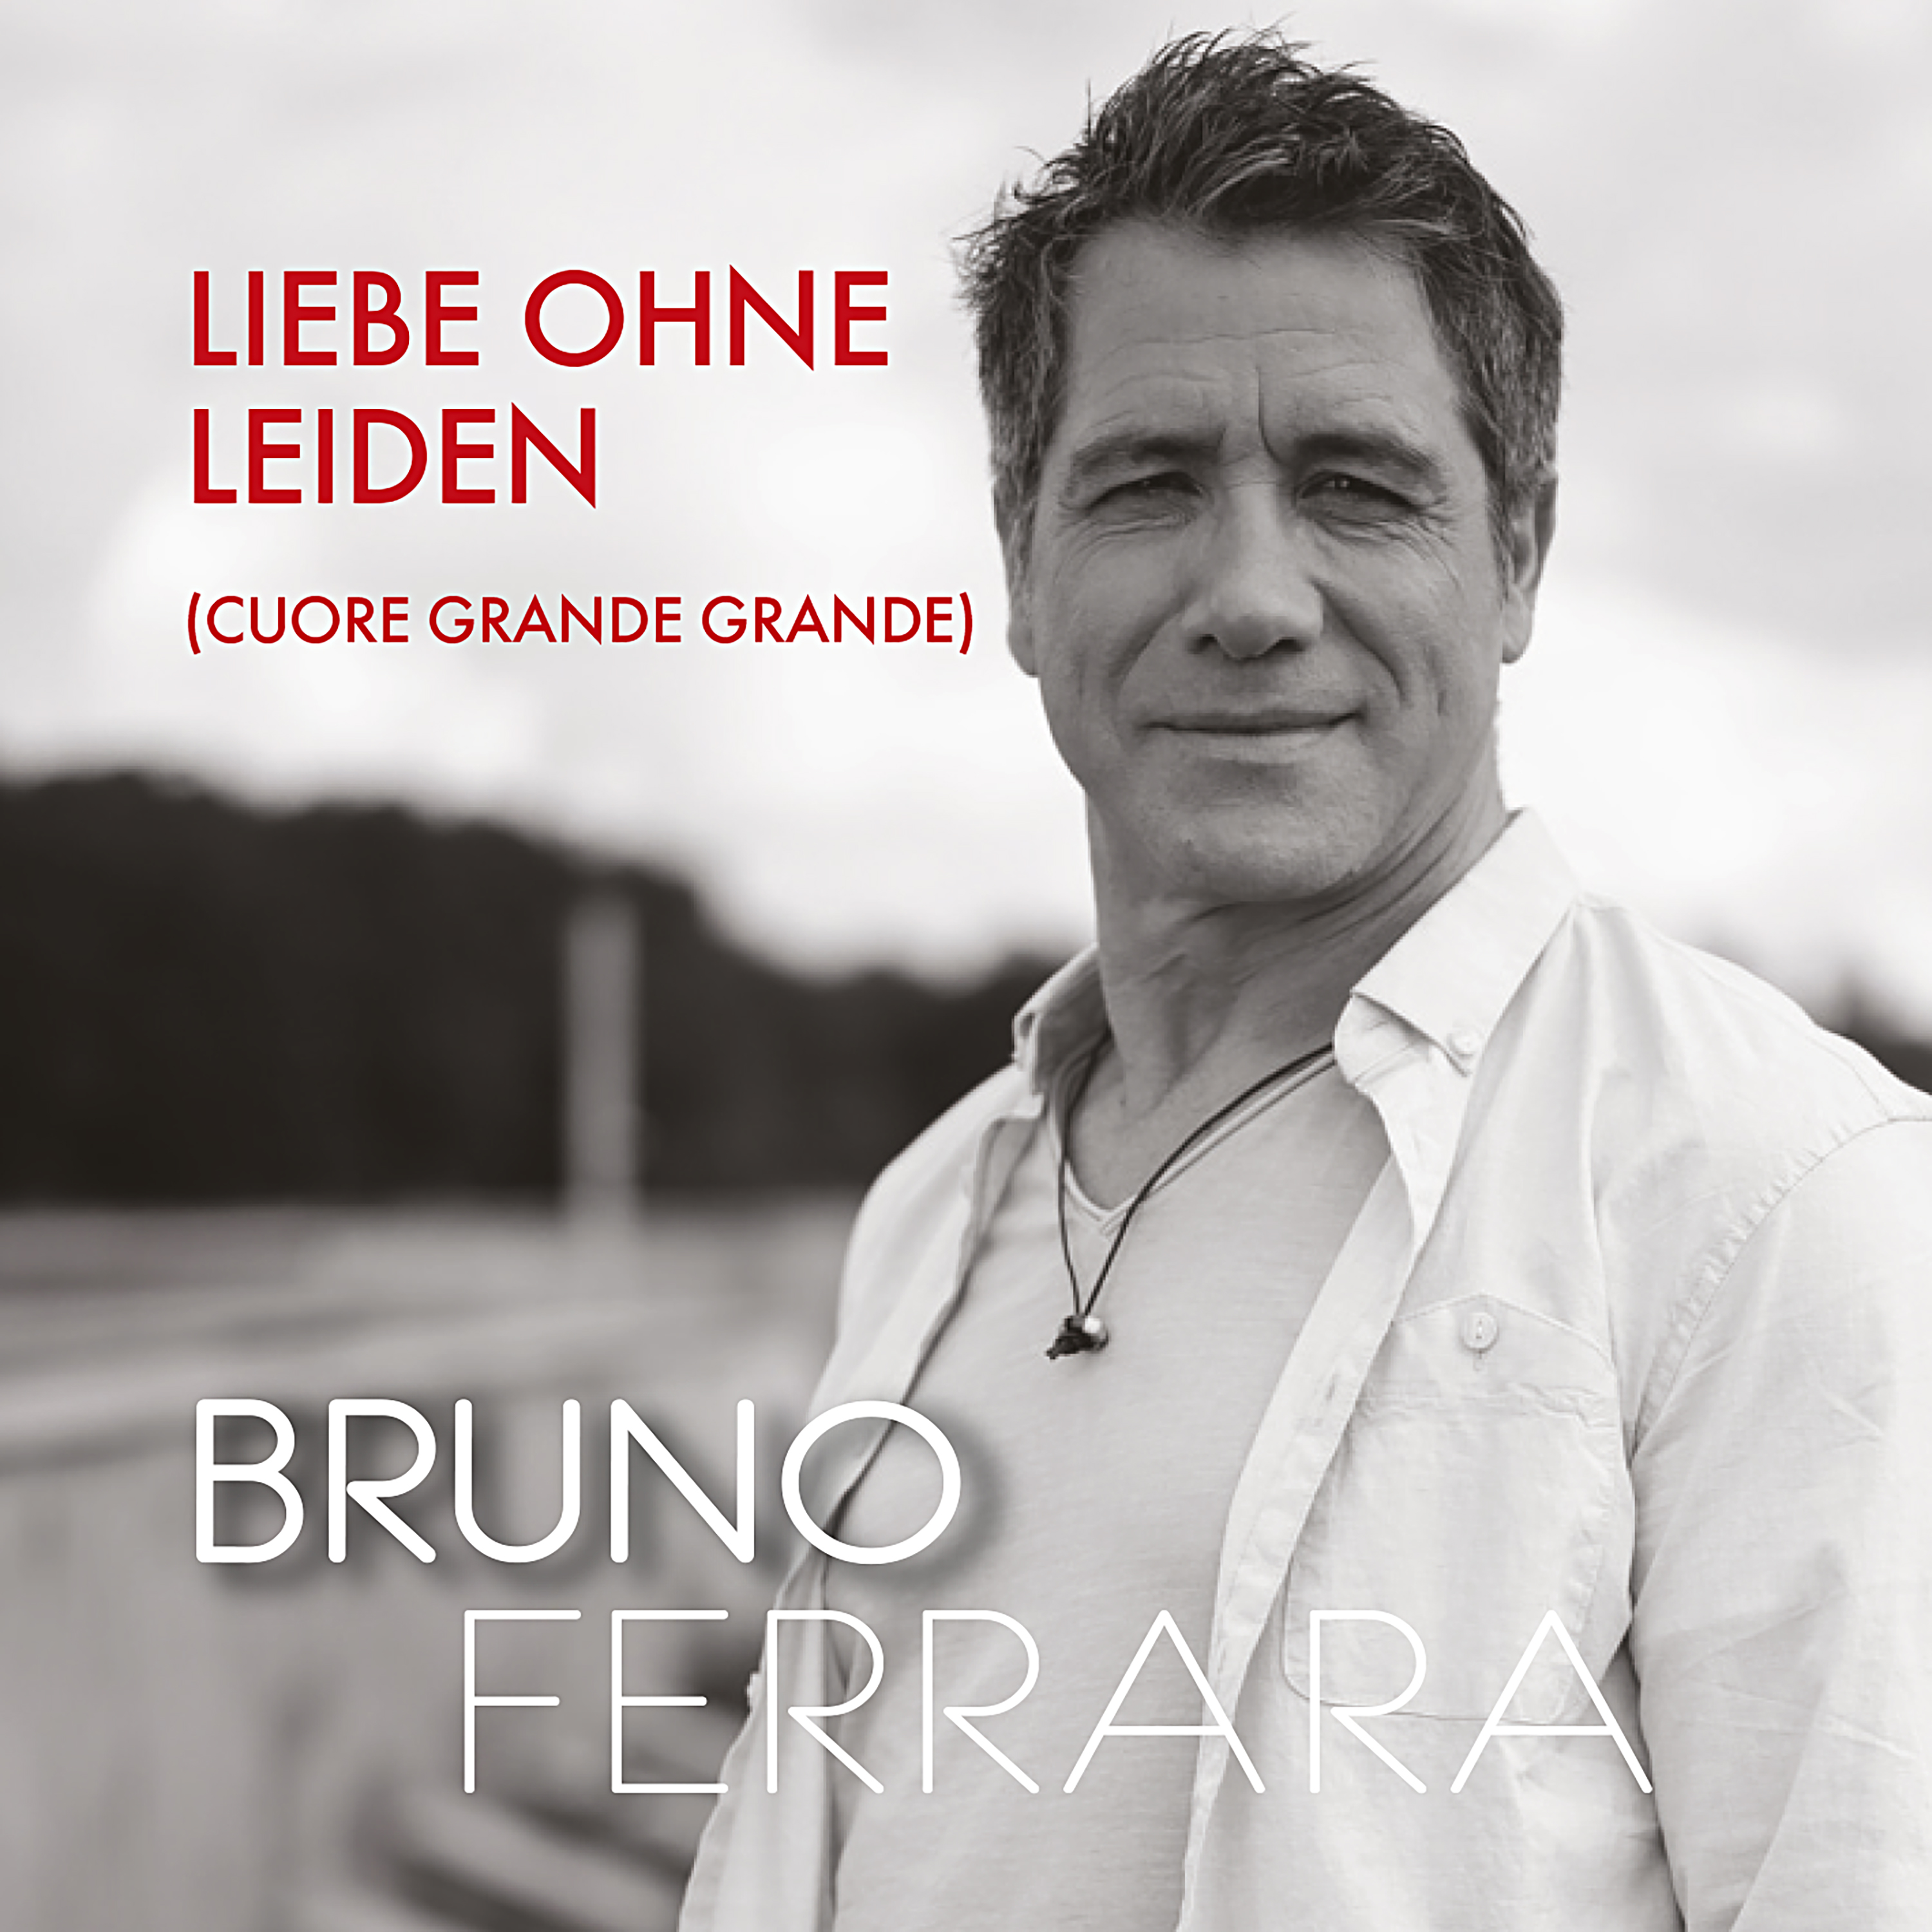 BRUNO FERRARA * Liebe ohne Leiden (Cuore grande grande) (Download-Track) .